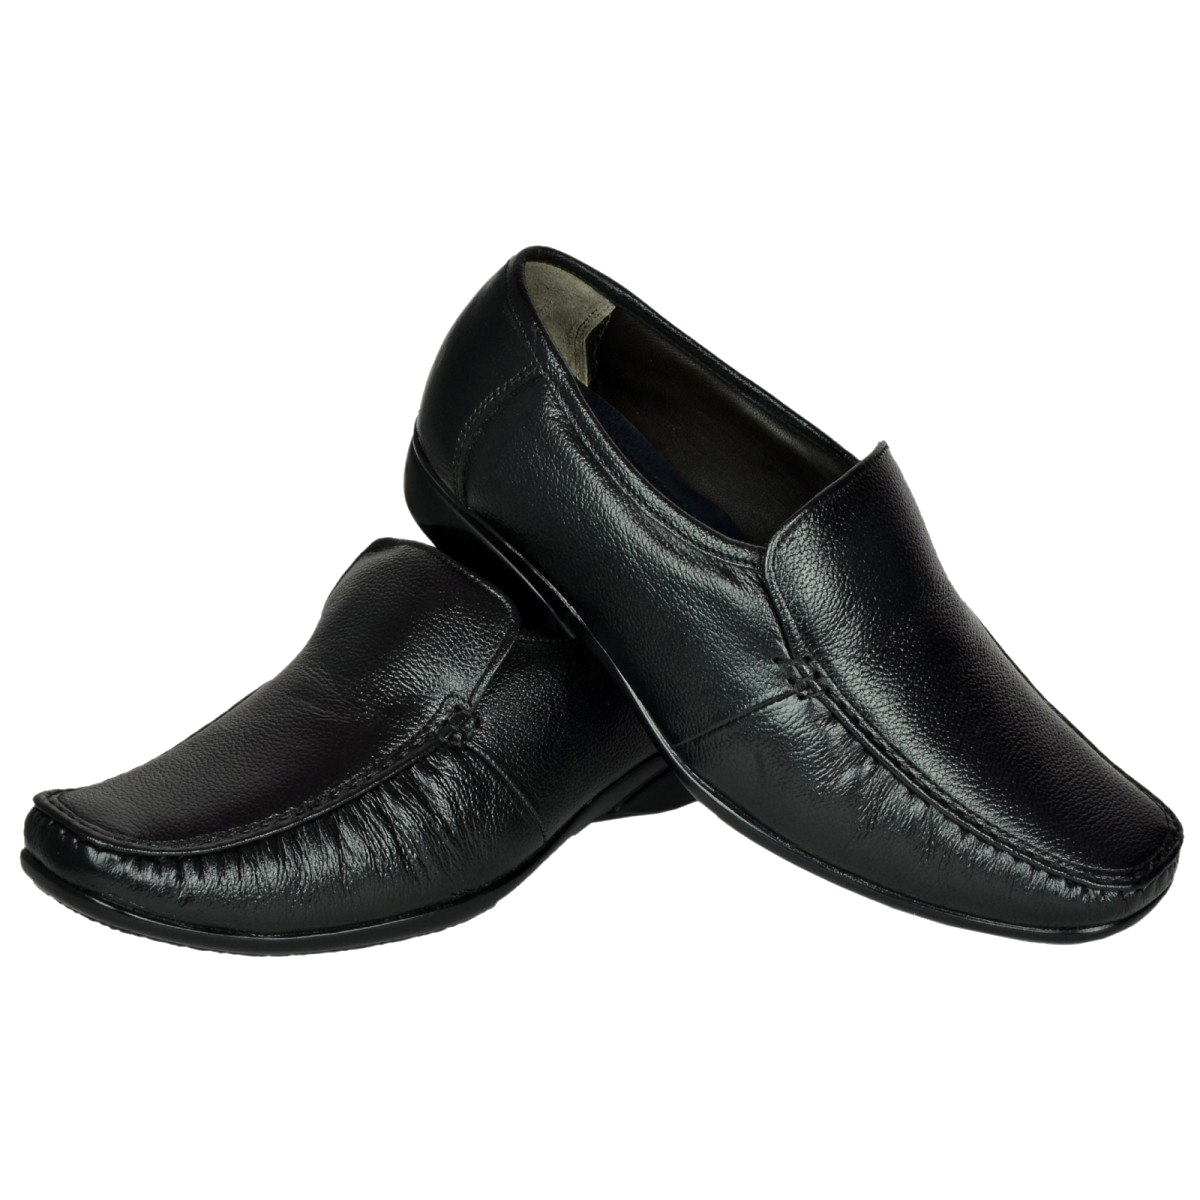 Black Shoes PNG Transparent Image